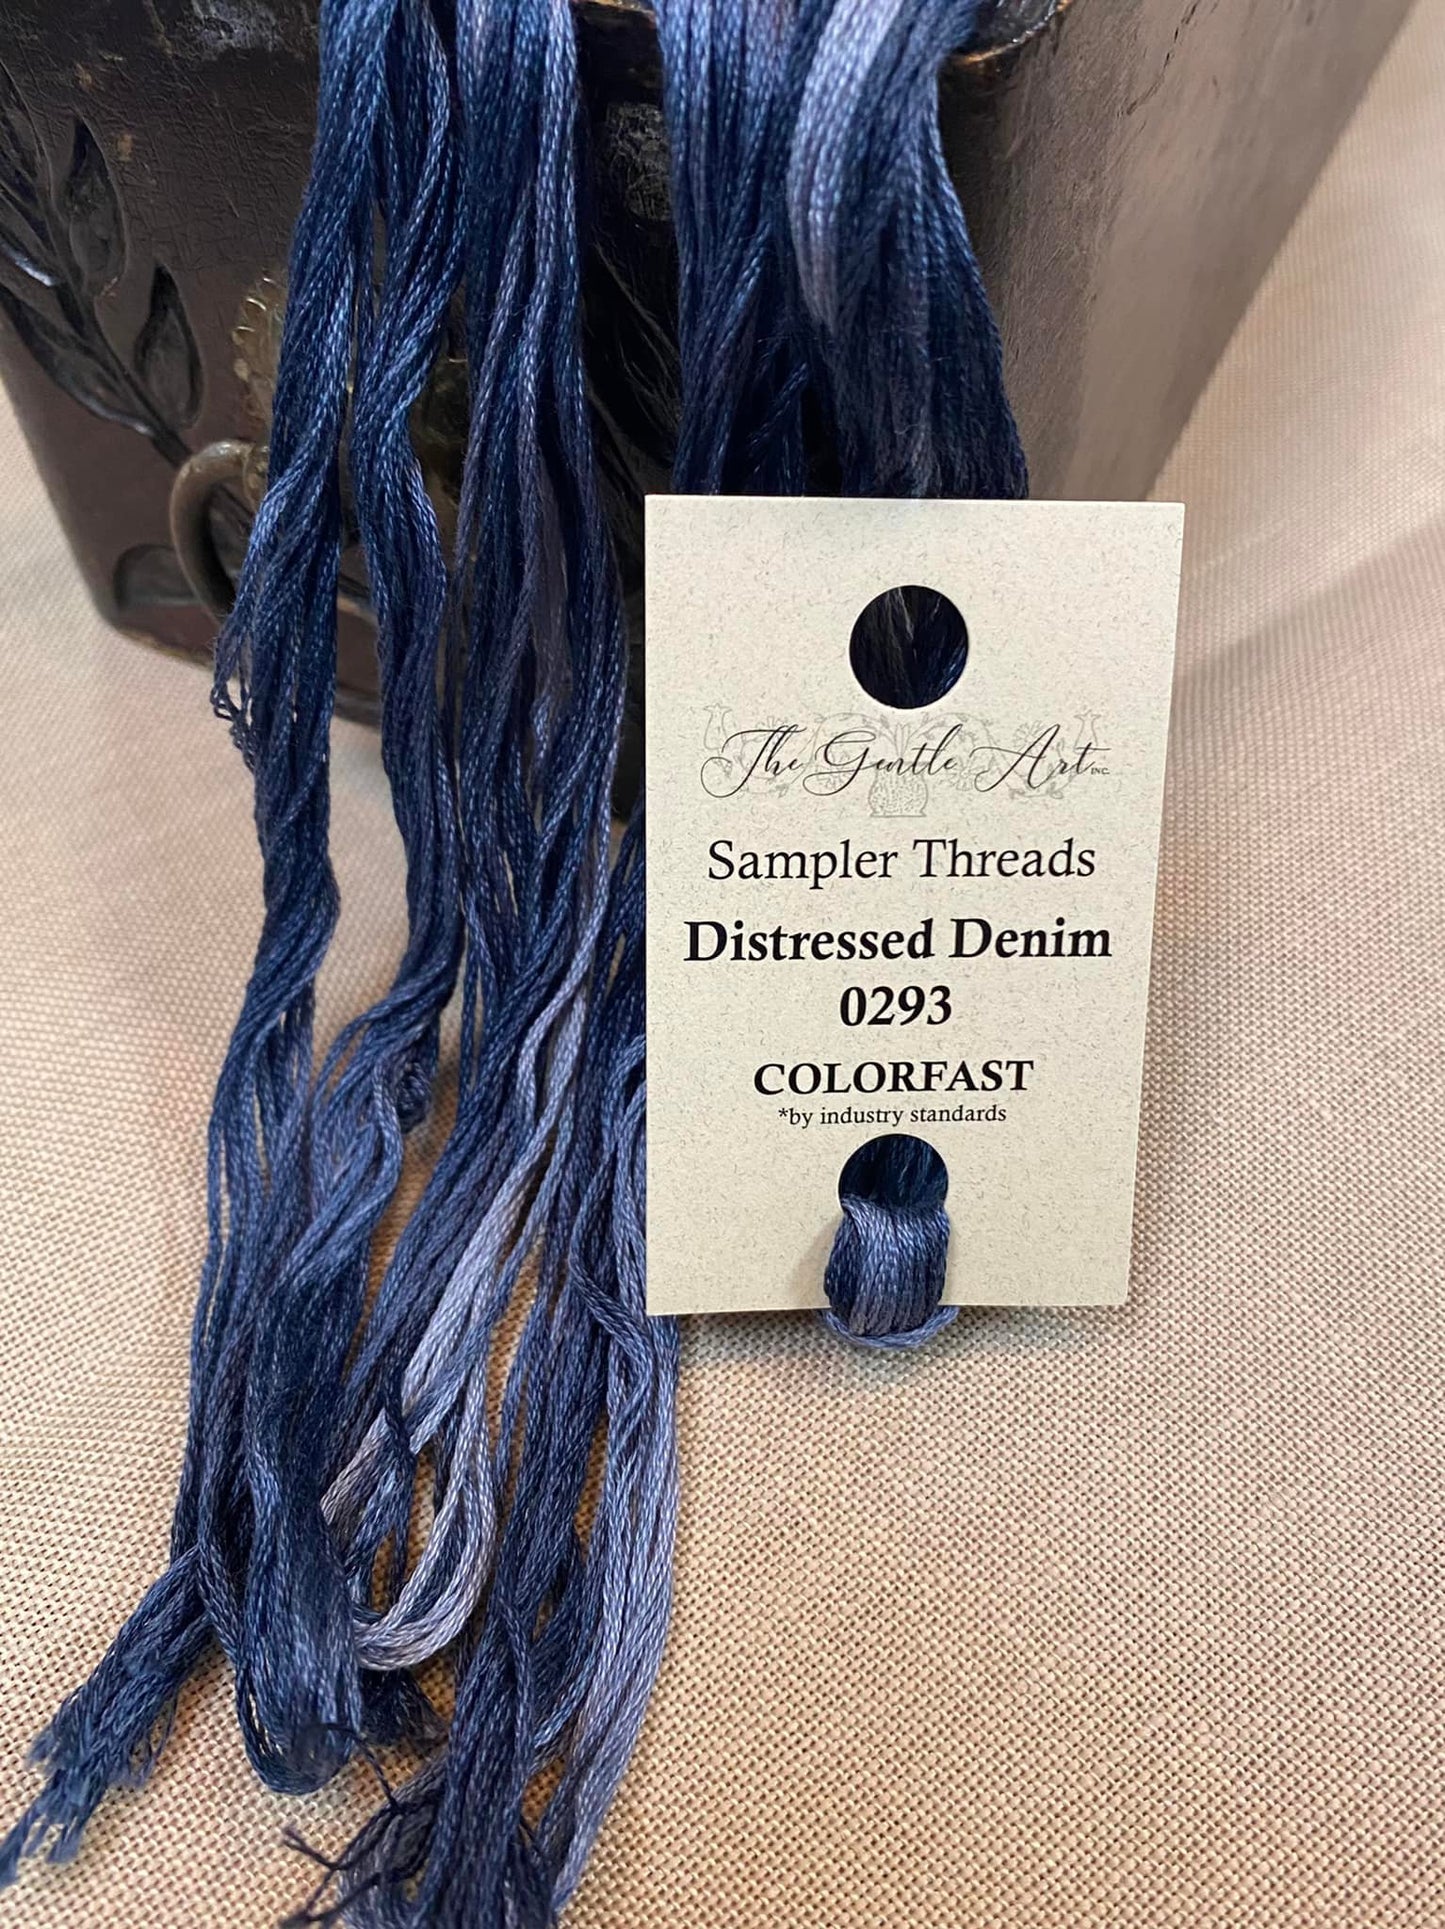 Distressed Denim, 0293, Sampler Threads